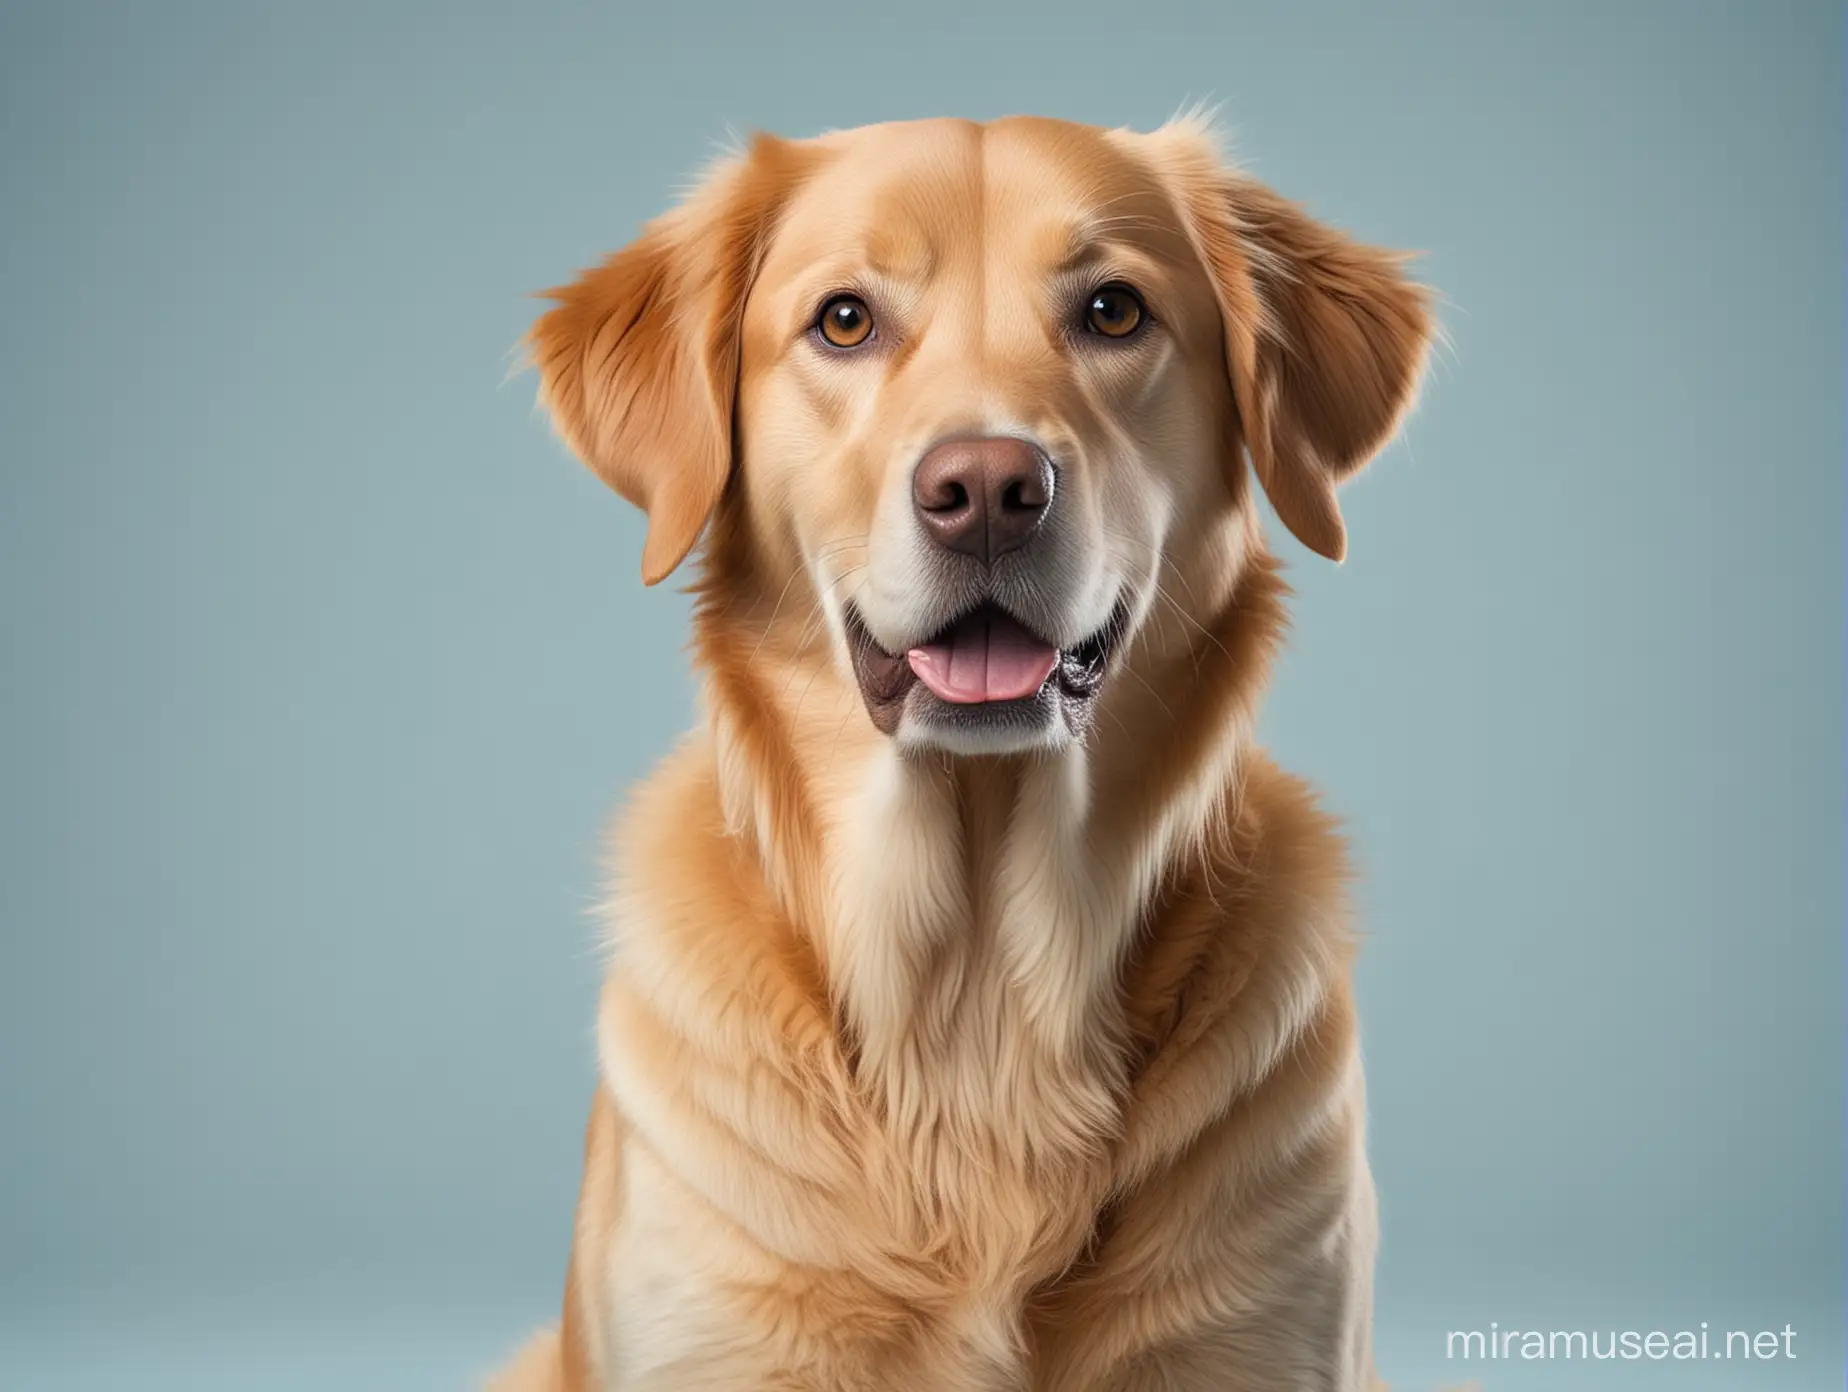 Adorable OneYearOld Retriever Dog Portrait in Light Blue Studio Setting